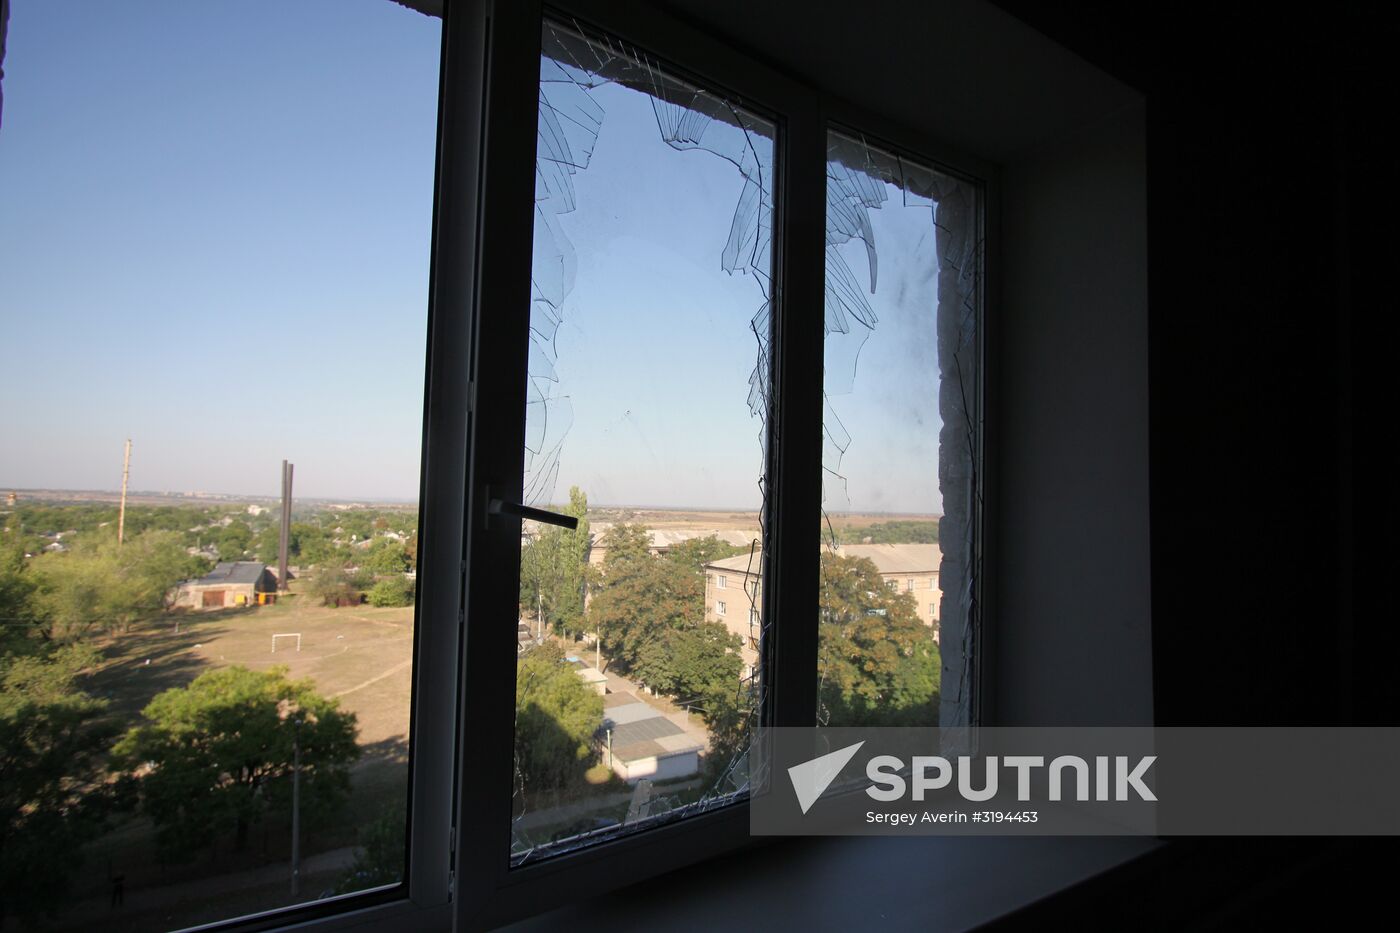 Aftermath of overnight shelling of Donetsk